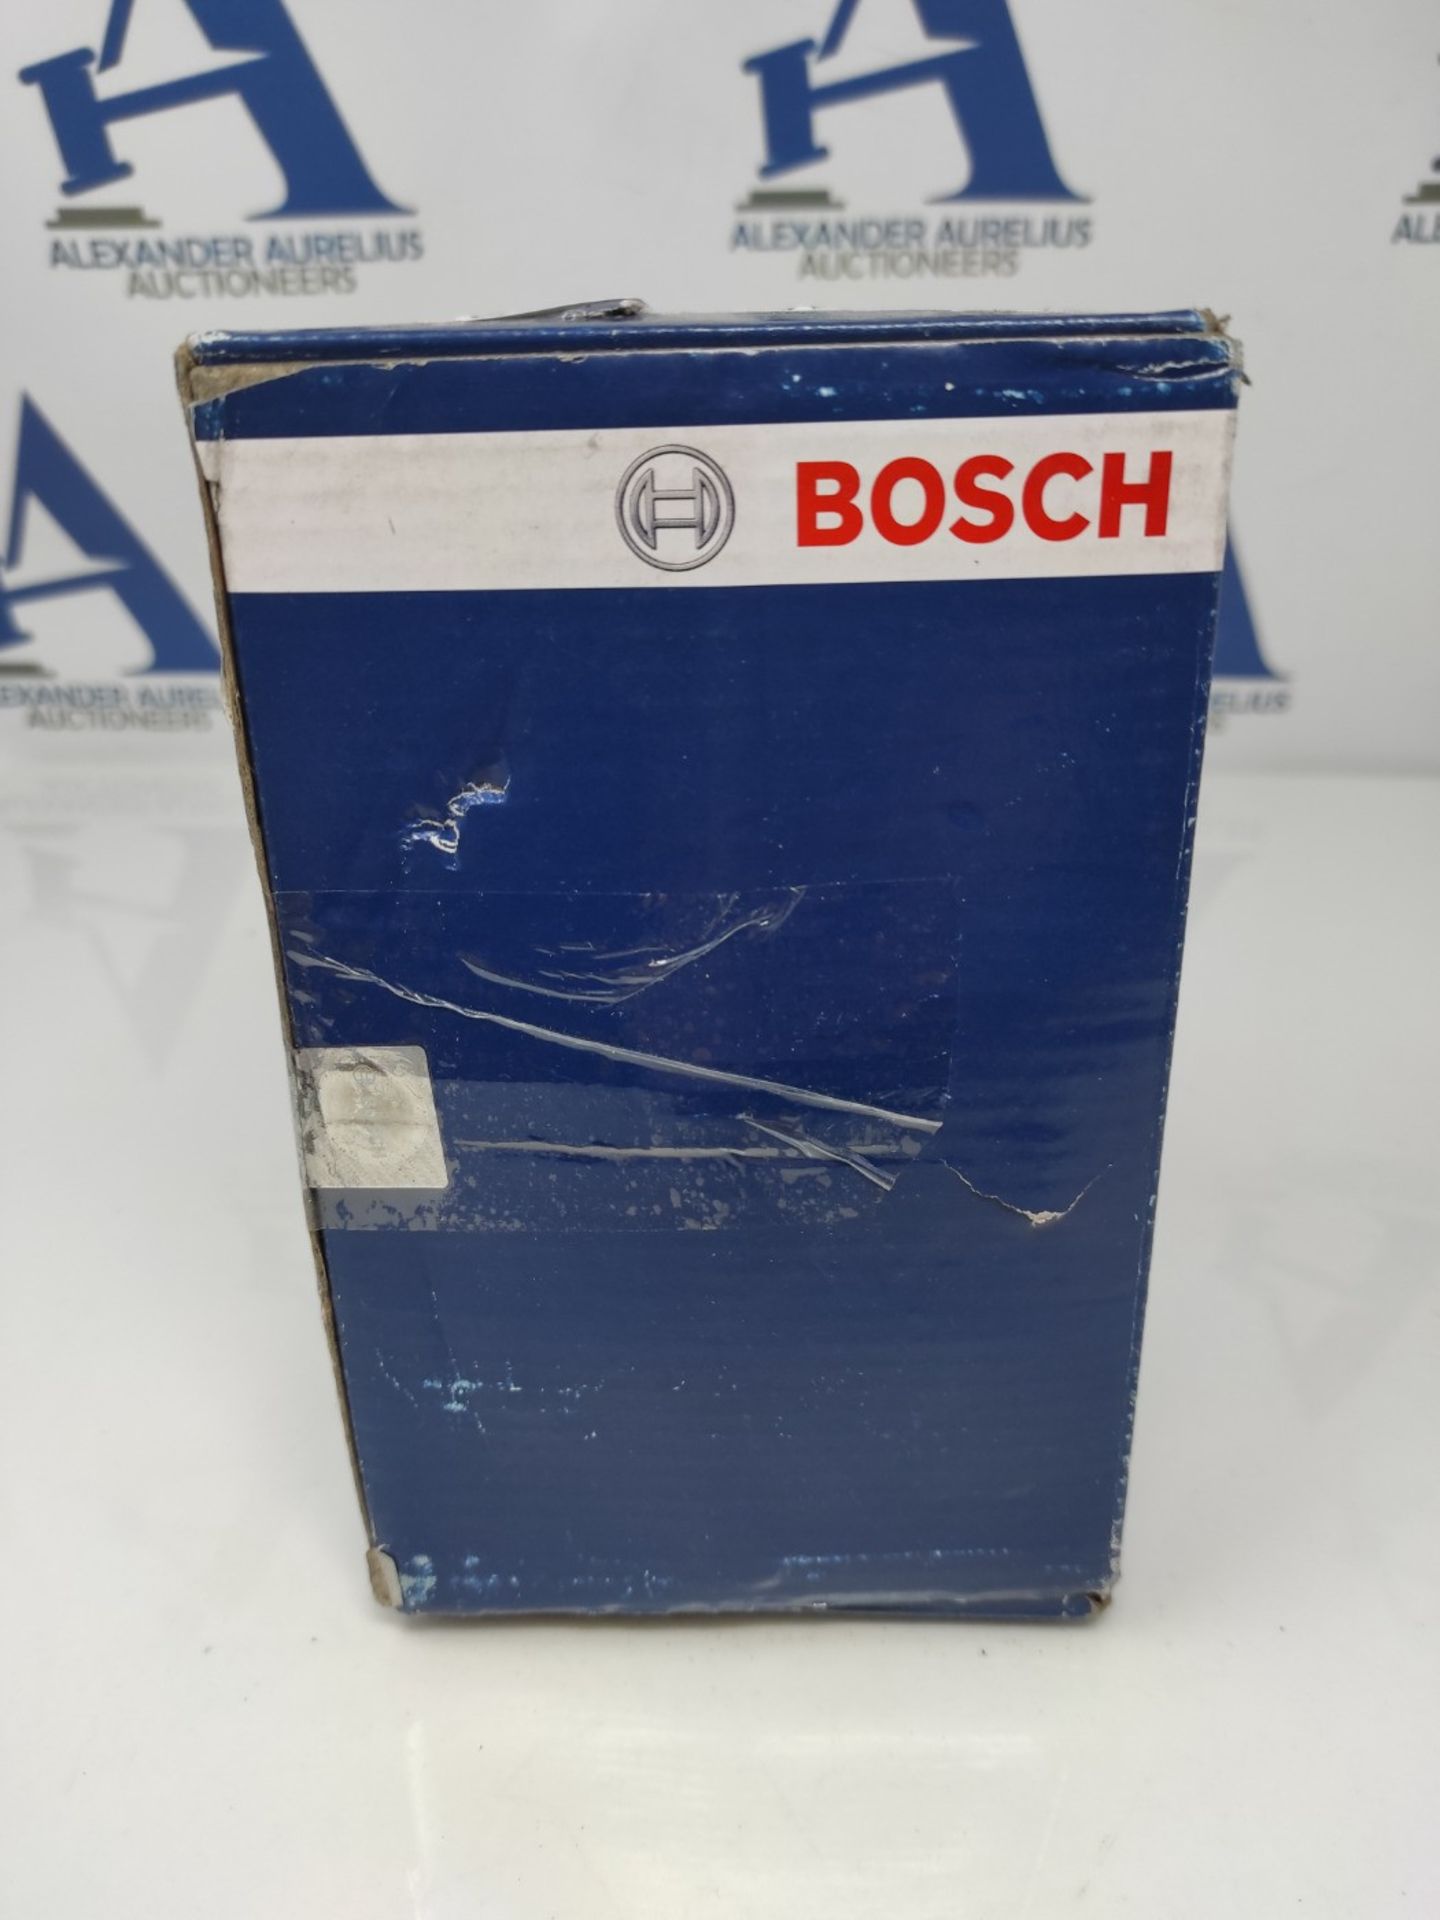 Bosch BP1445 brake pads - front axle - ECE-R90 certification - four brake pads per set - Image 2 of 3